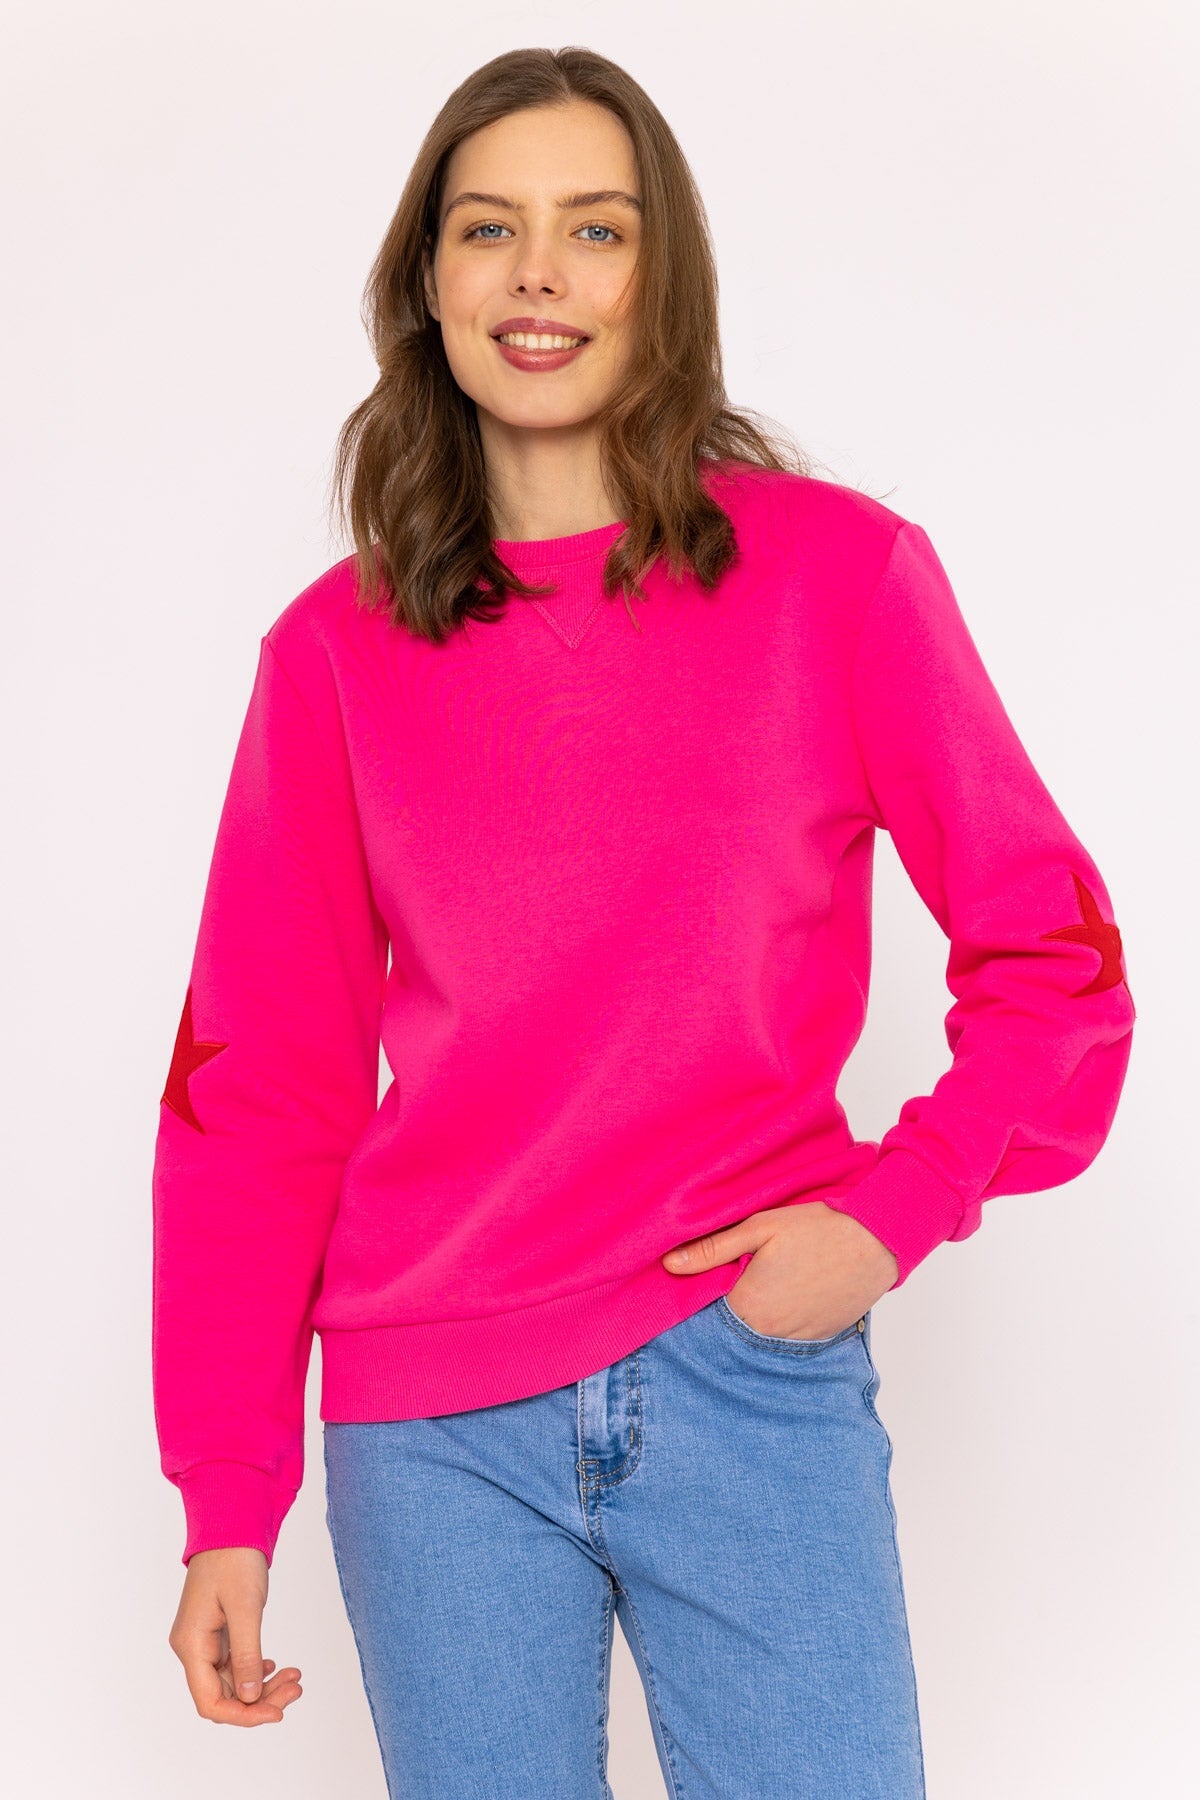 Sleeve Detail Sweatshirt in Pink - Sweatshirts | Carraig Donn